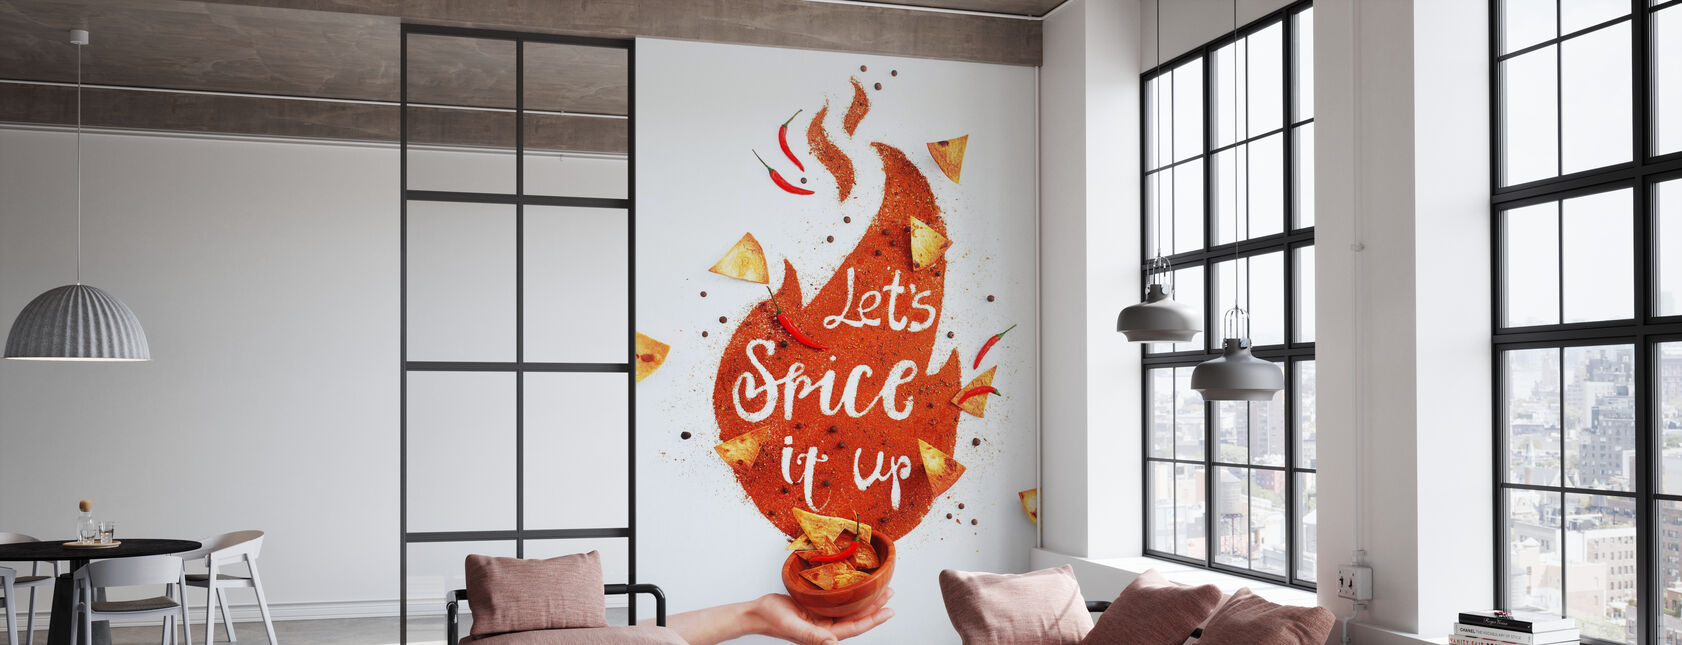 Spice it Up - Wallpaper - Office